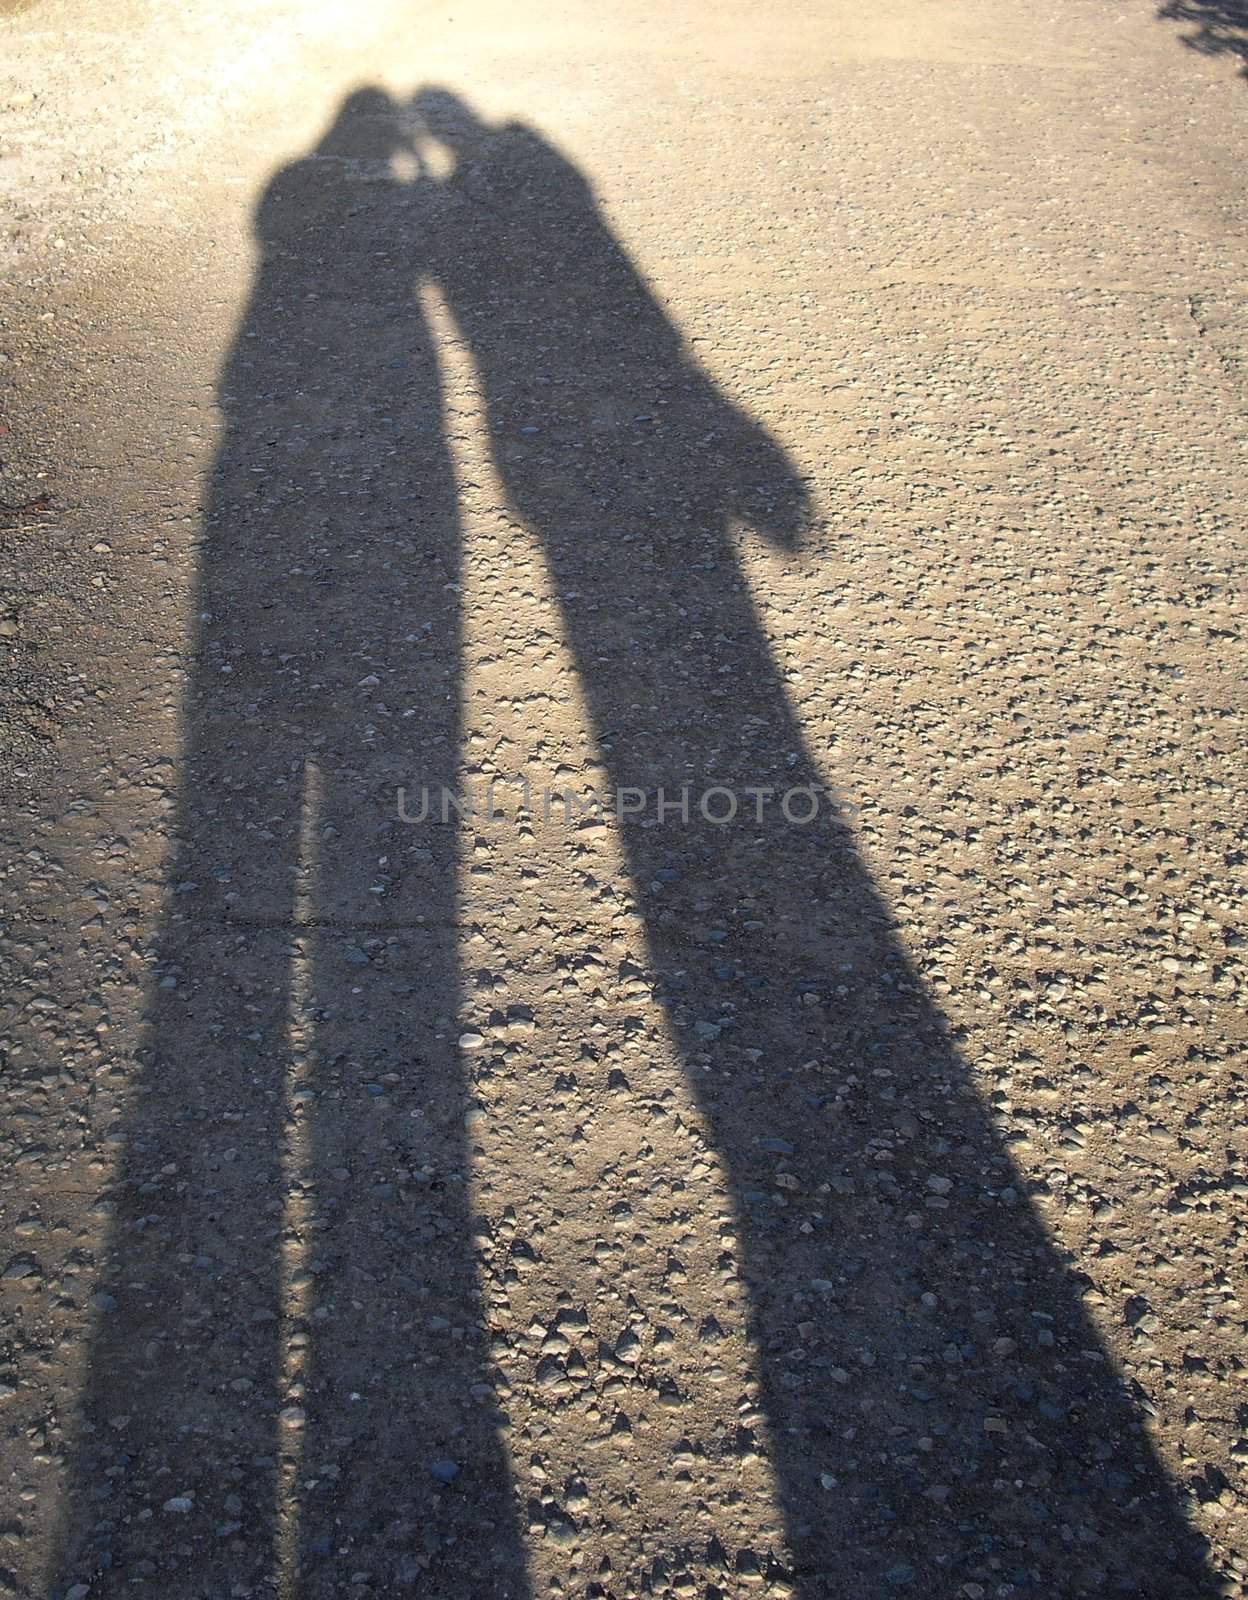 People's shadows